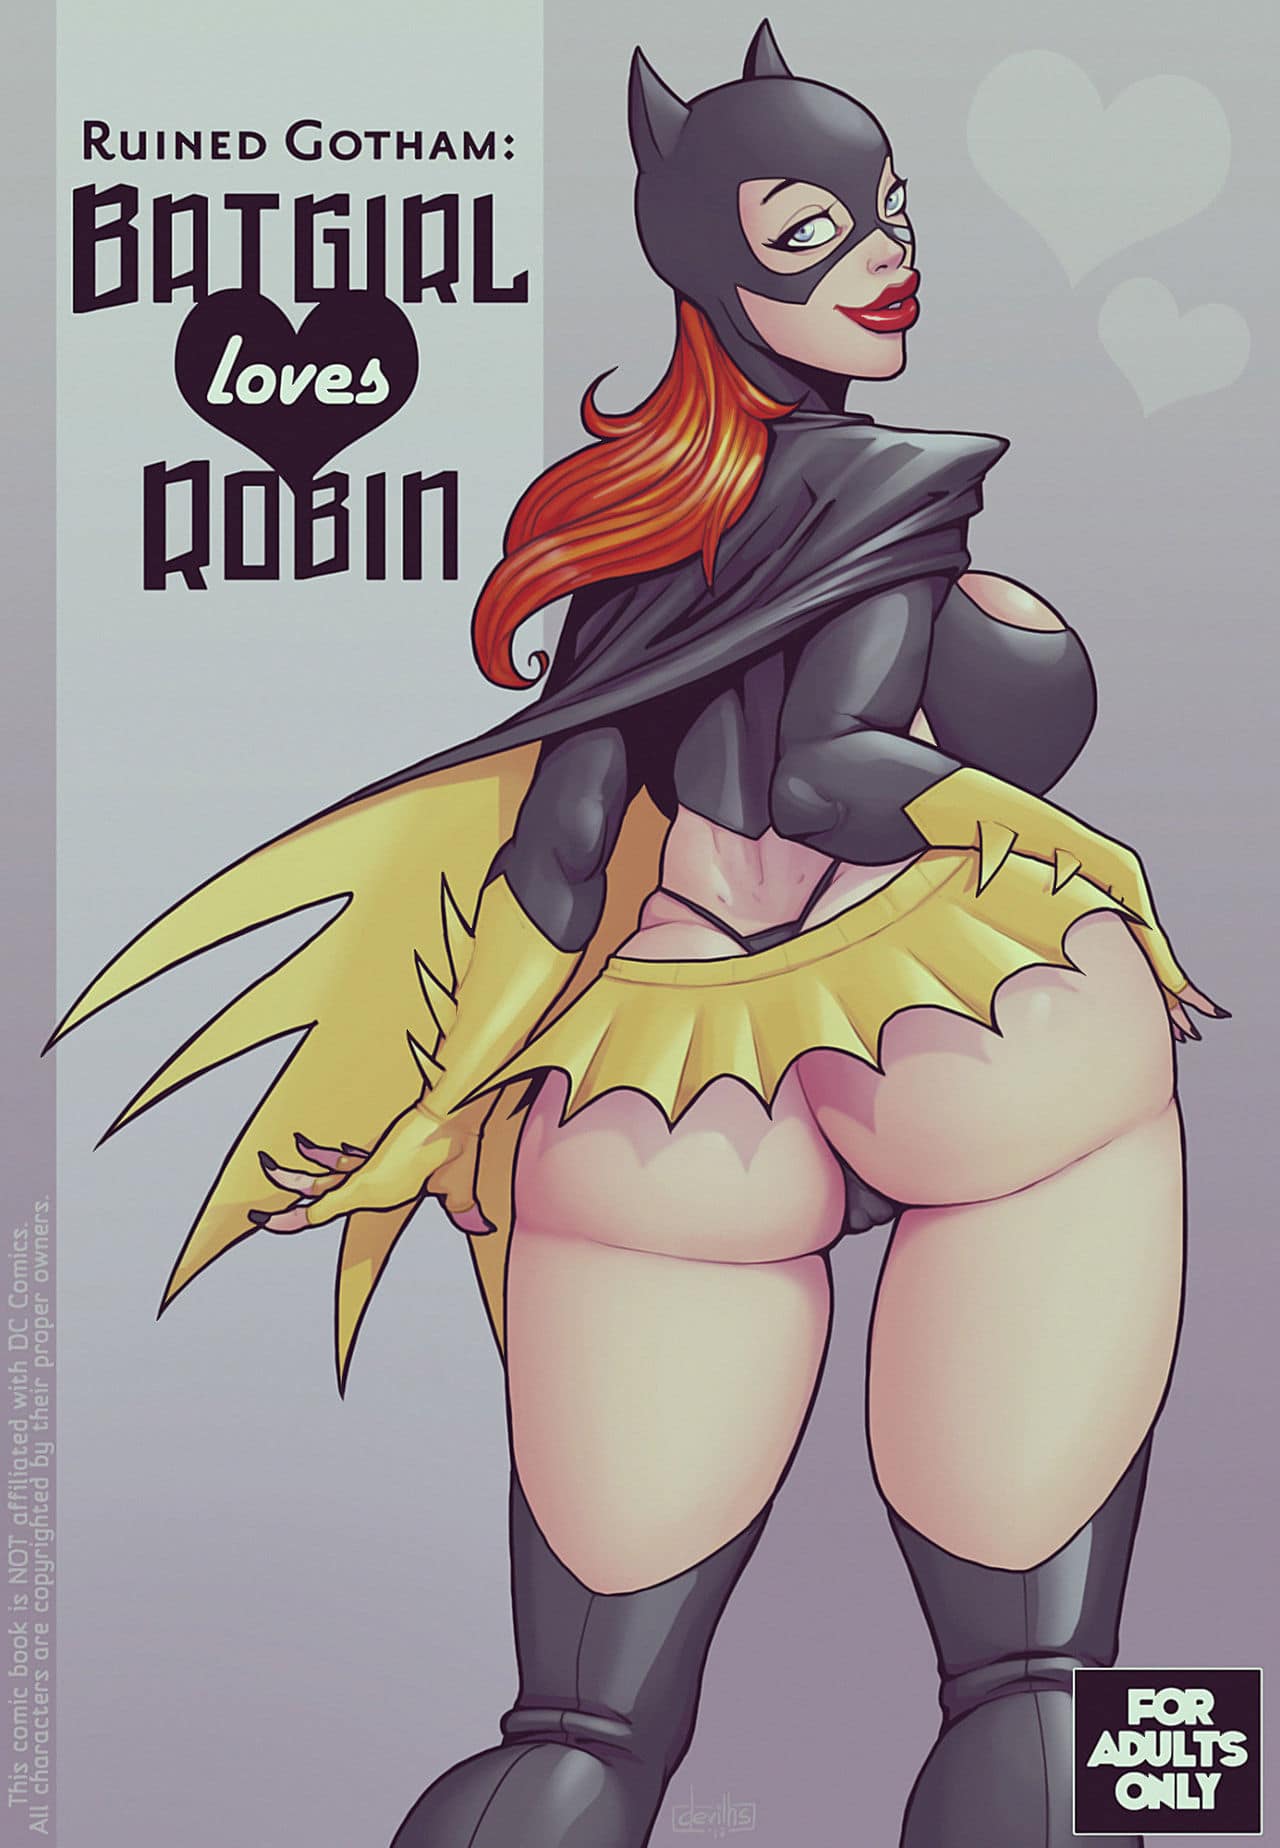 Batgirl Cartoon Nude - Ruined Gotham - Batgirl Loves Robin - KingComiX.com